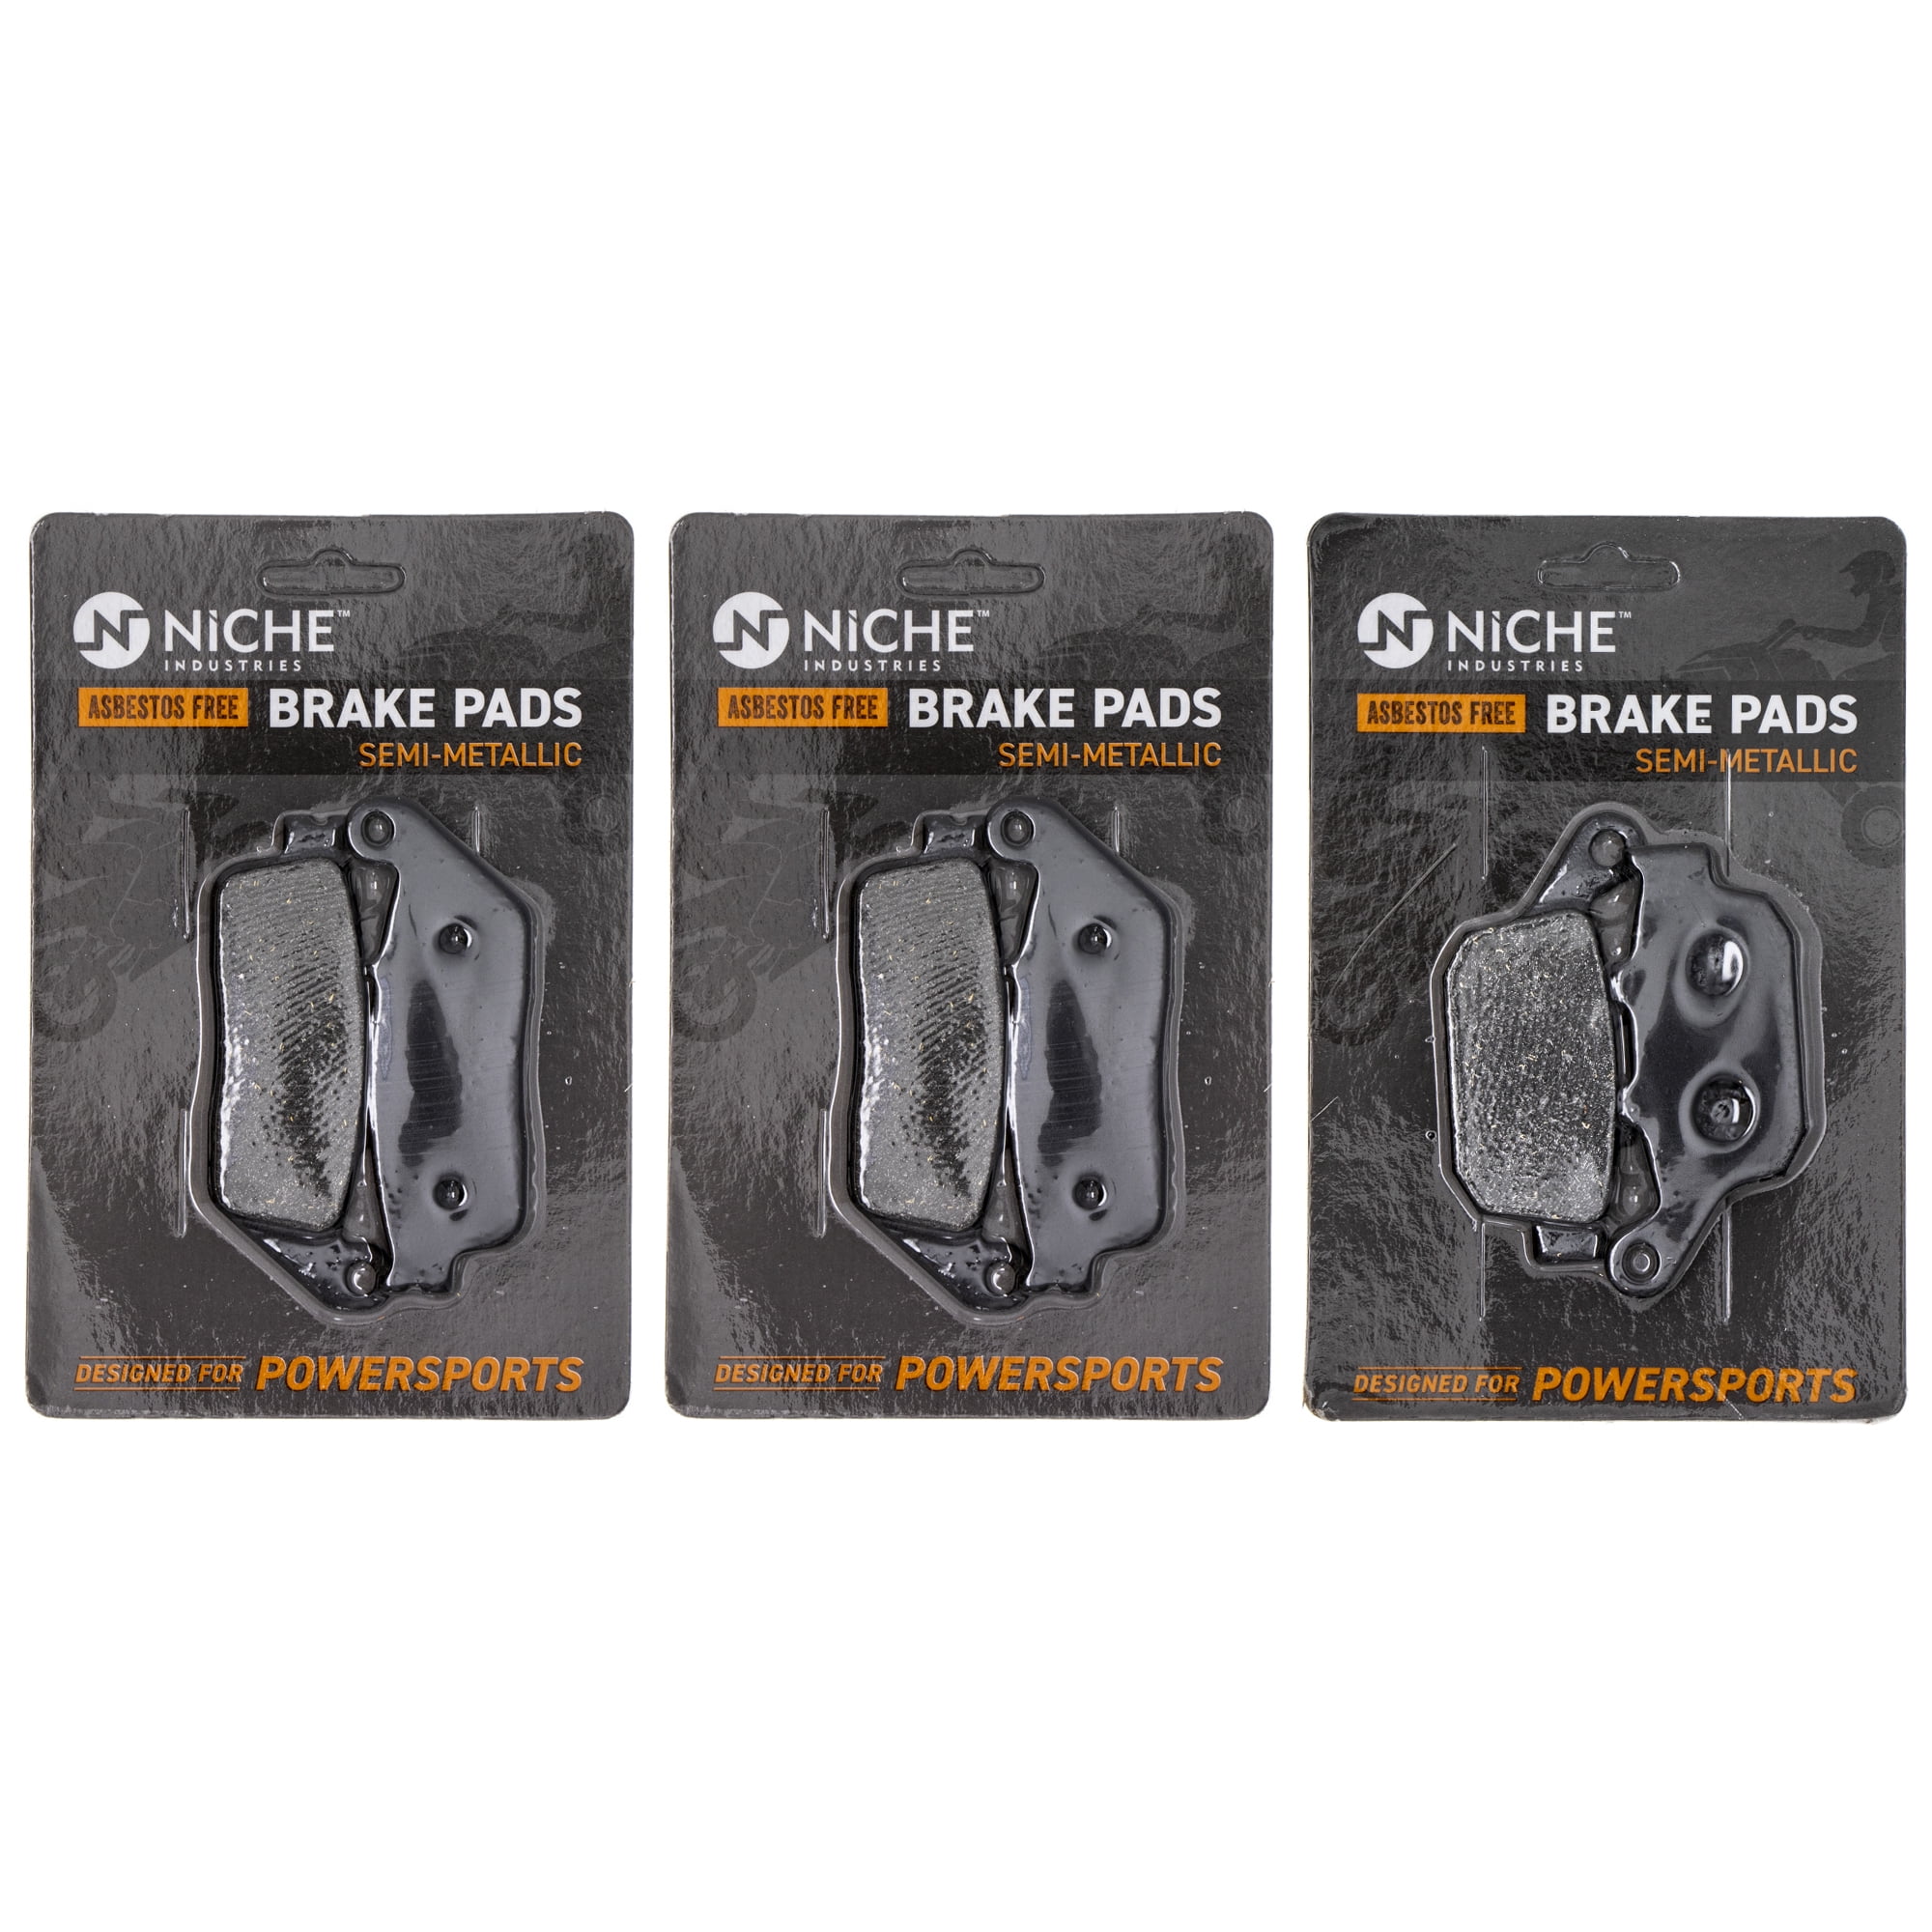 NICHE Brake Pad Set for Kawasaki Versys 650 43082-0155 43082-0150 43082-0151 Complete Semi-Metallic 